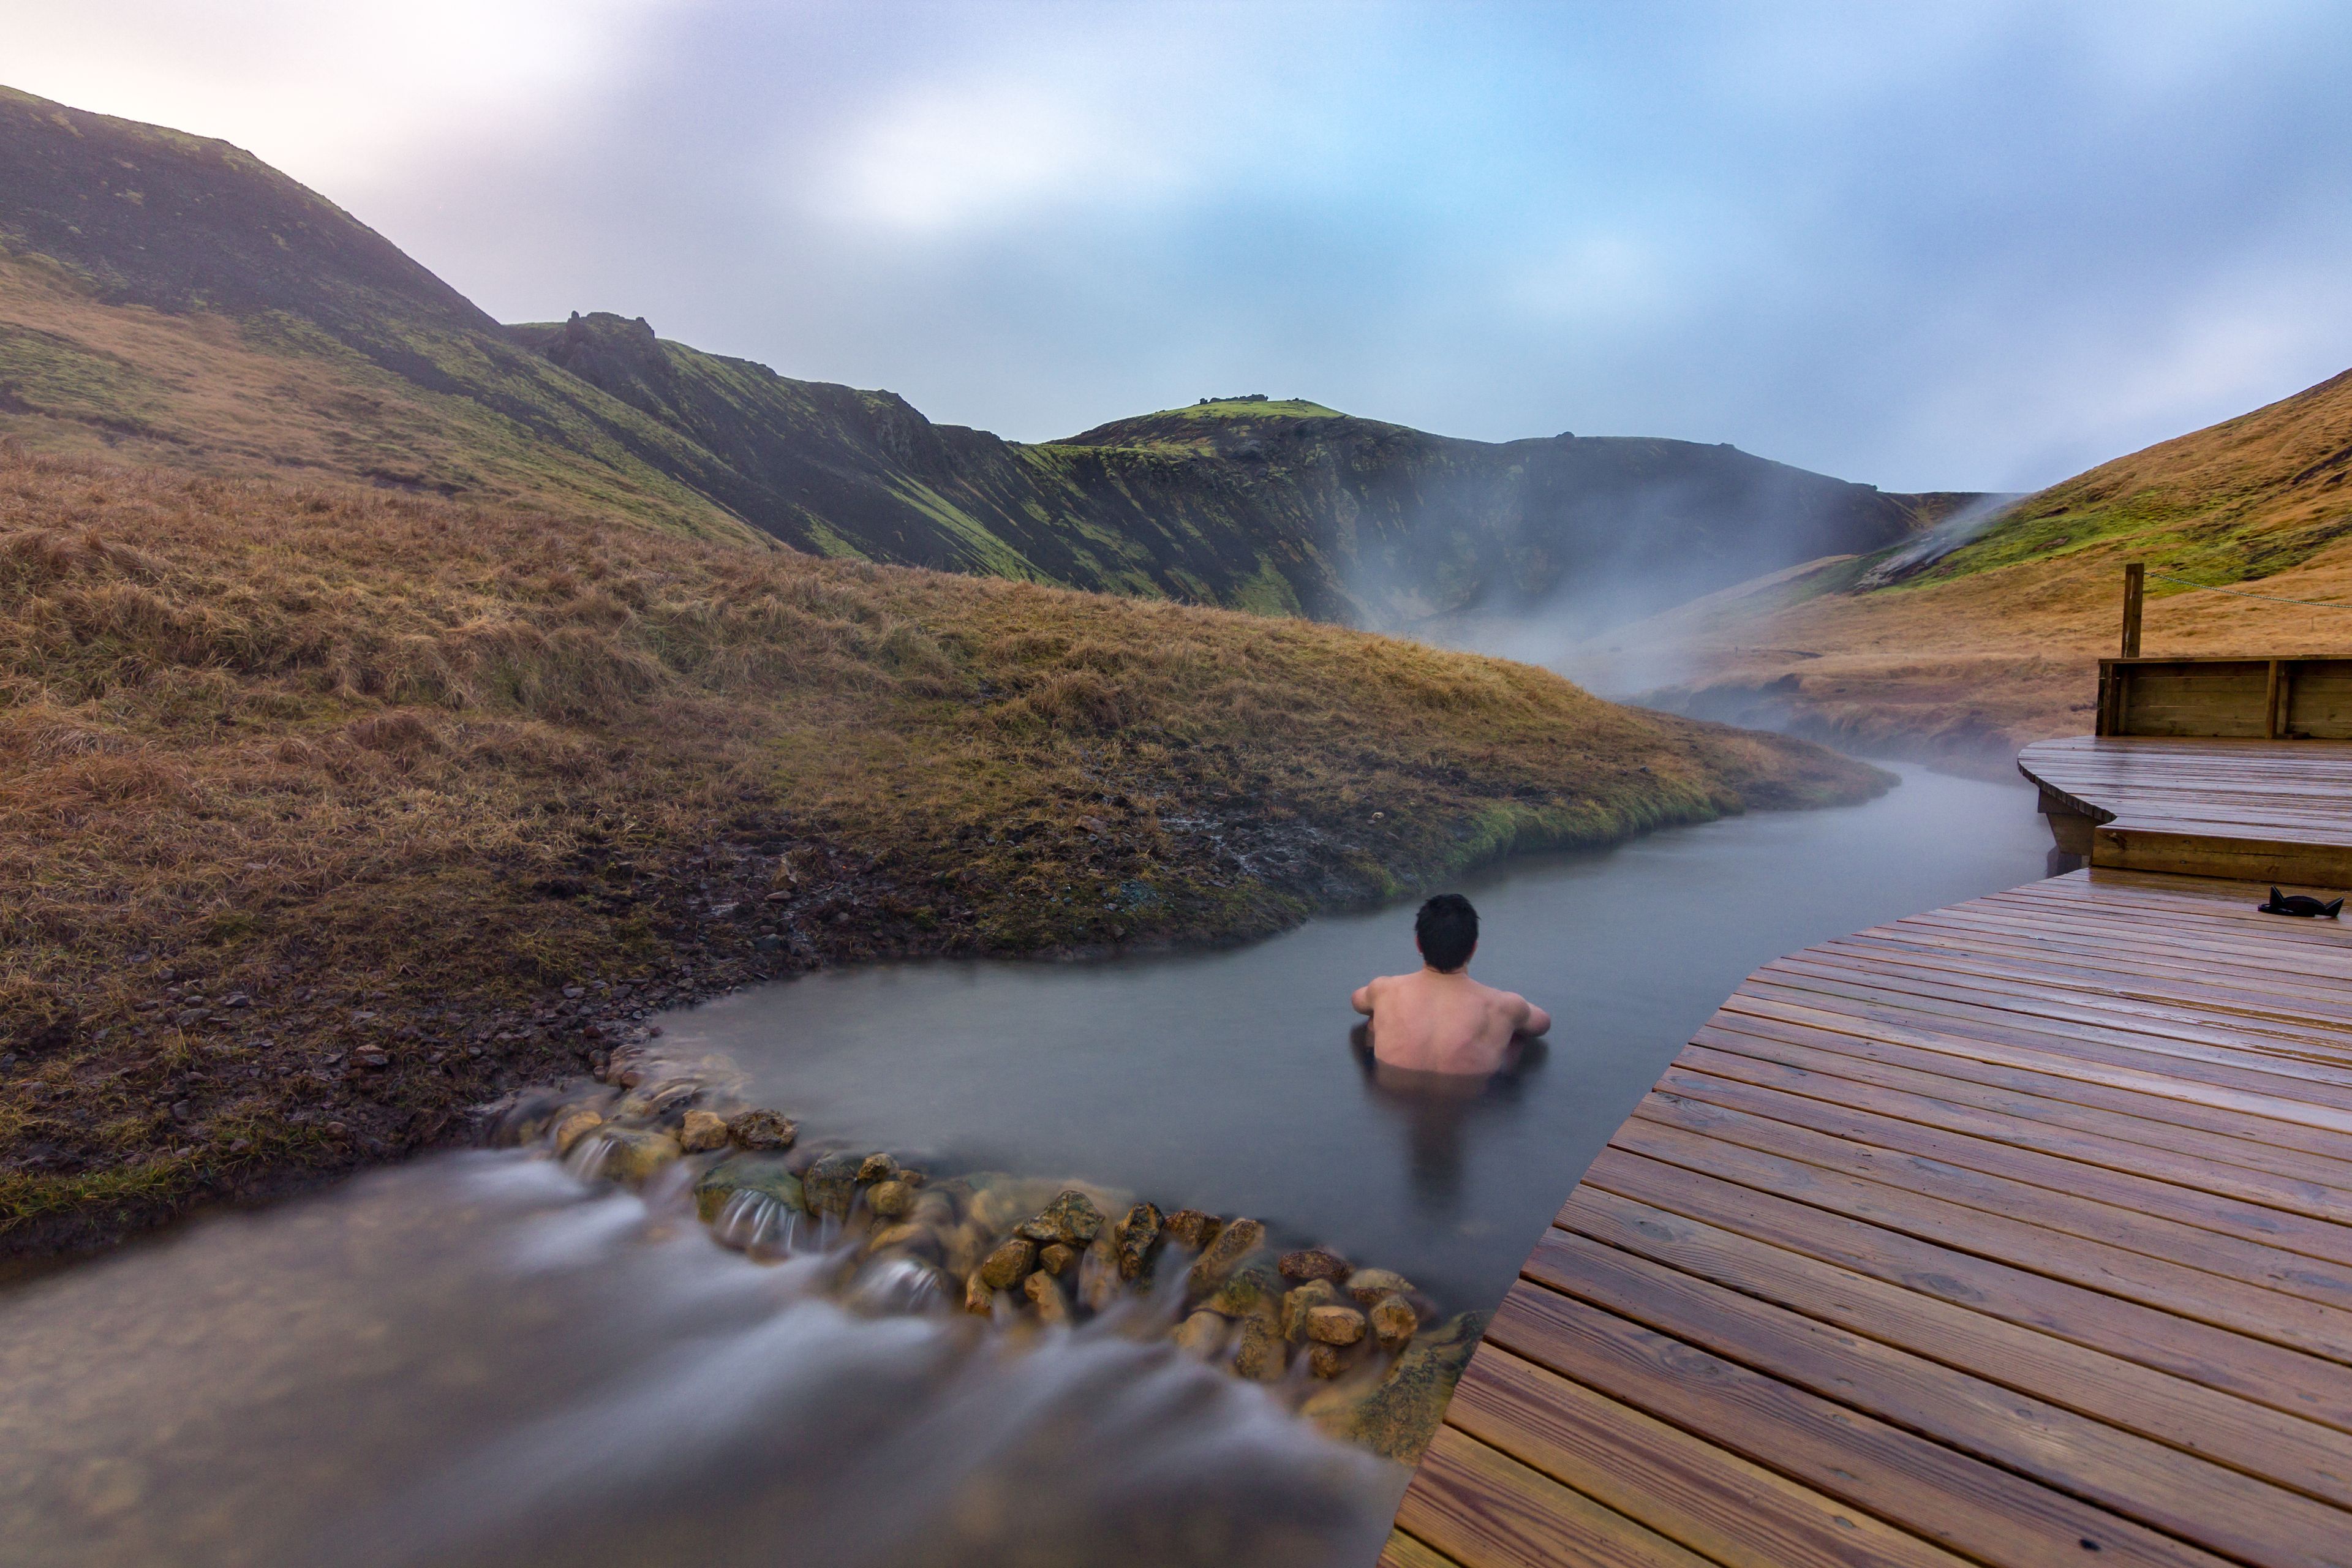 Reykjadalur hot spring, thermal river and its green landscape